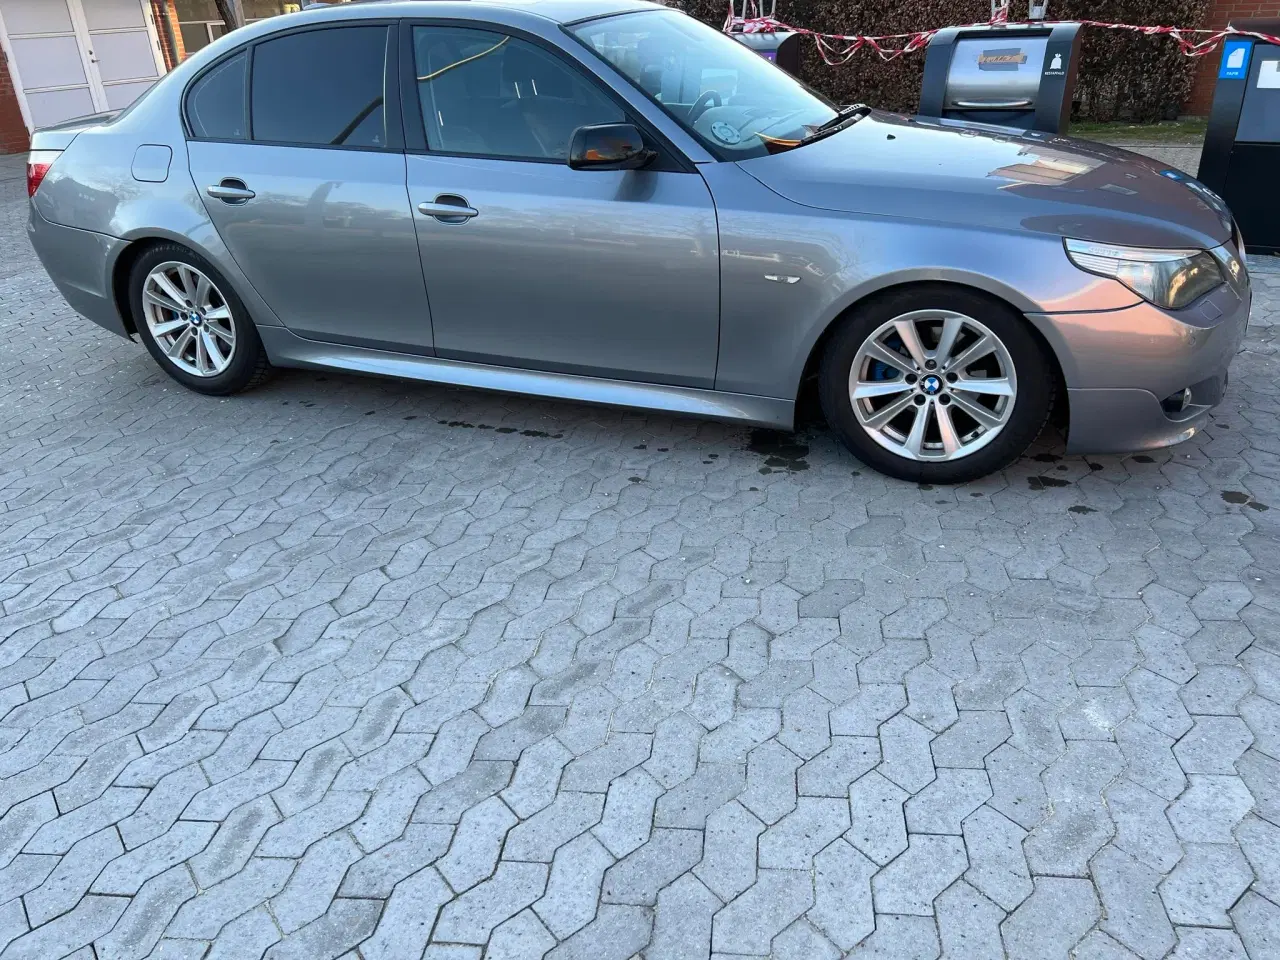 Billede 4 - Personbil BMW 520i